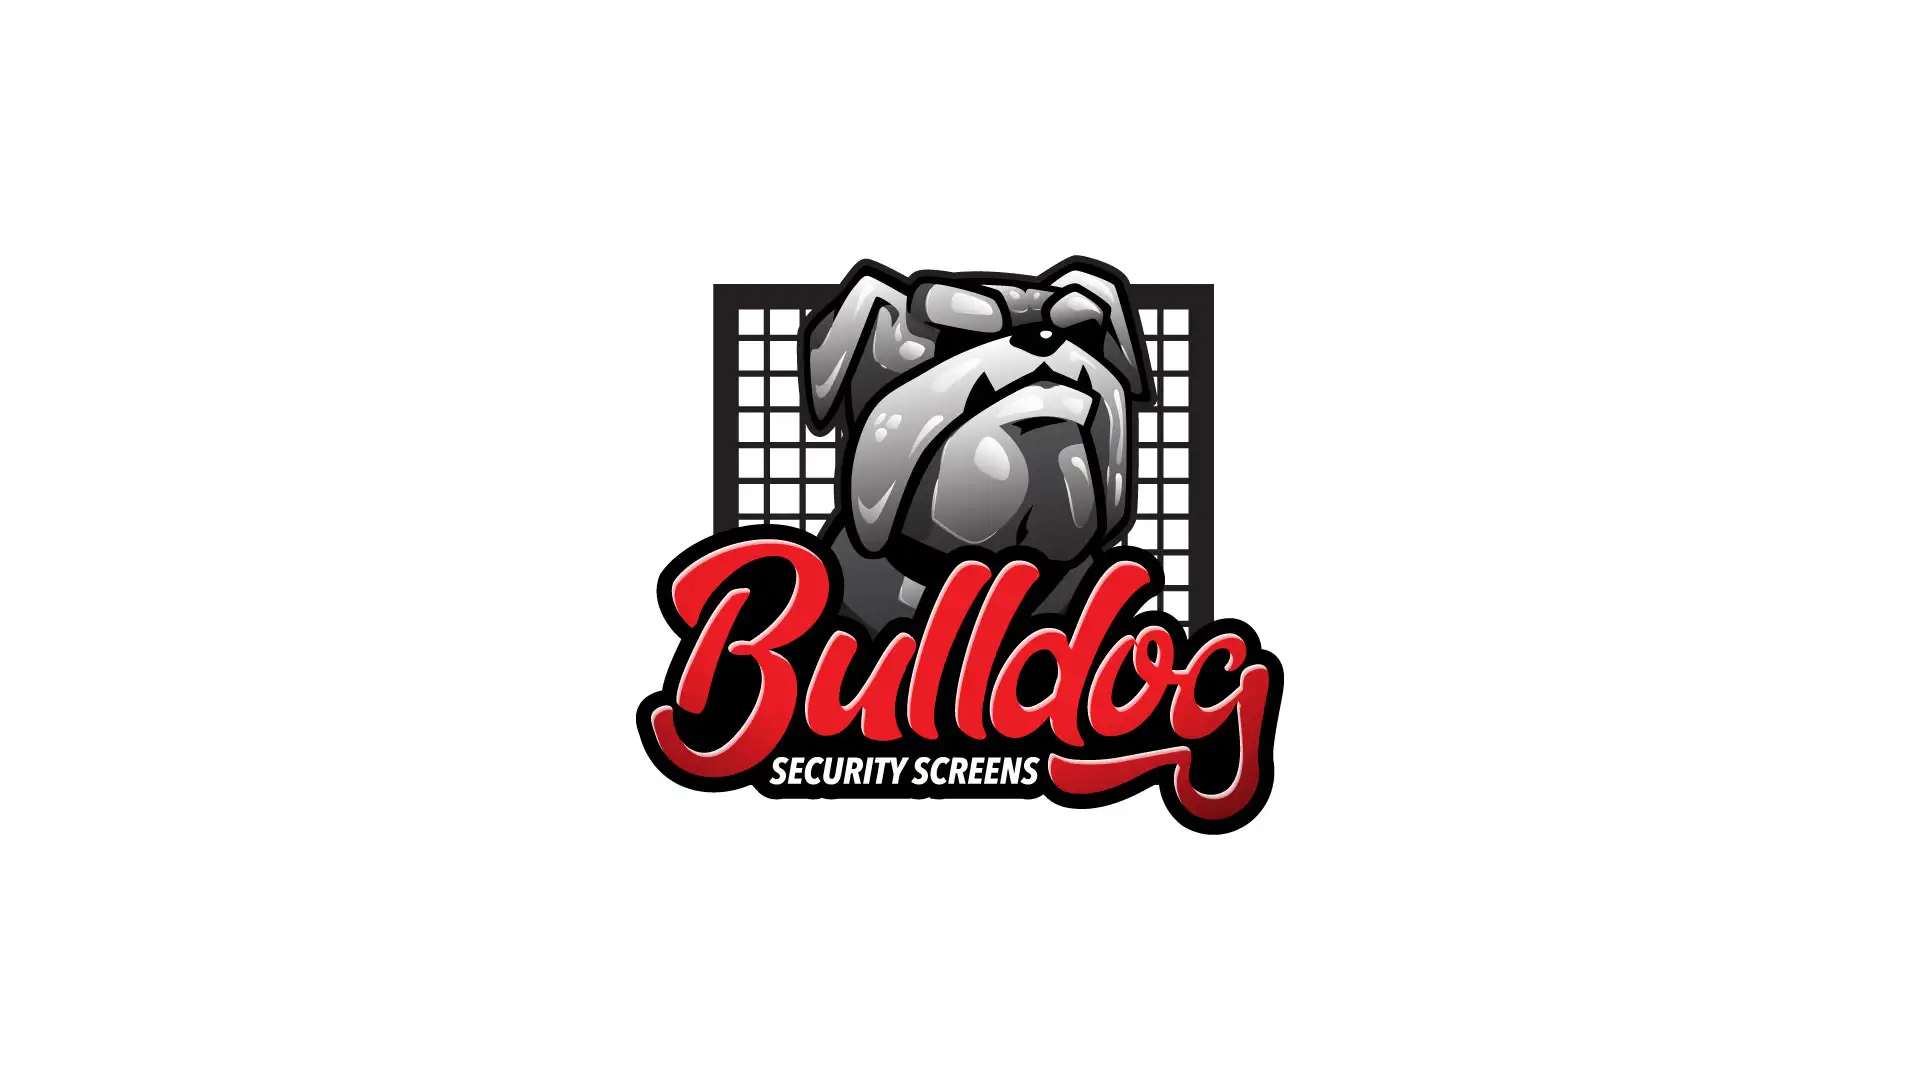 Bulldog Security Screens logo rebrand by Dusty Drake